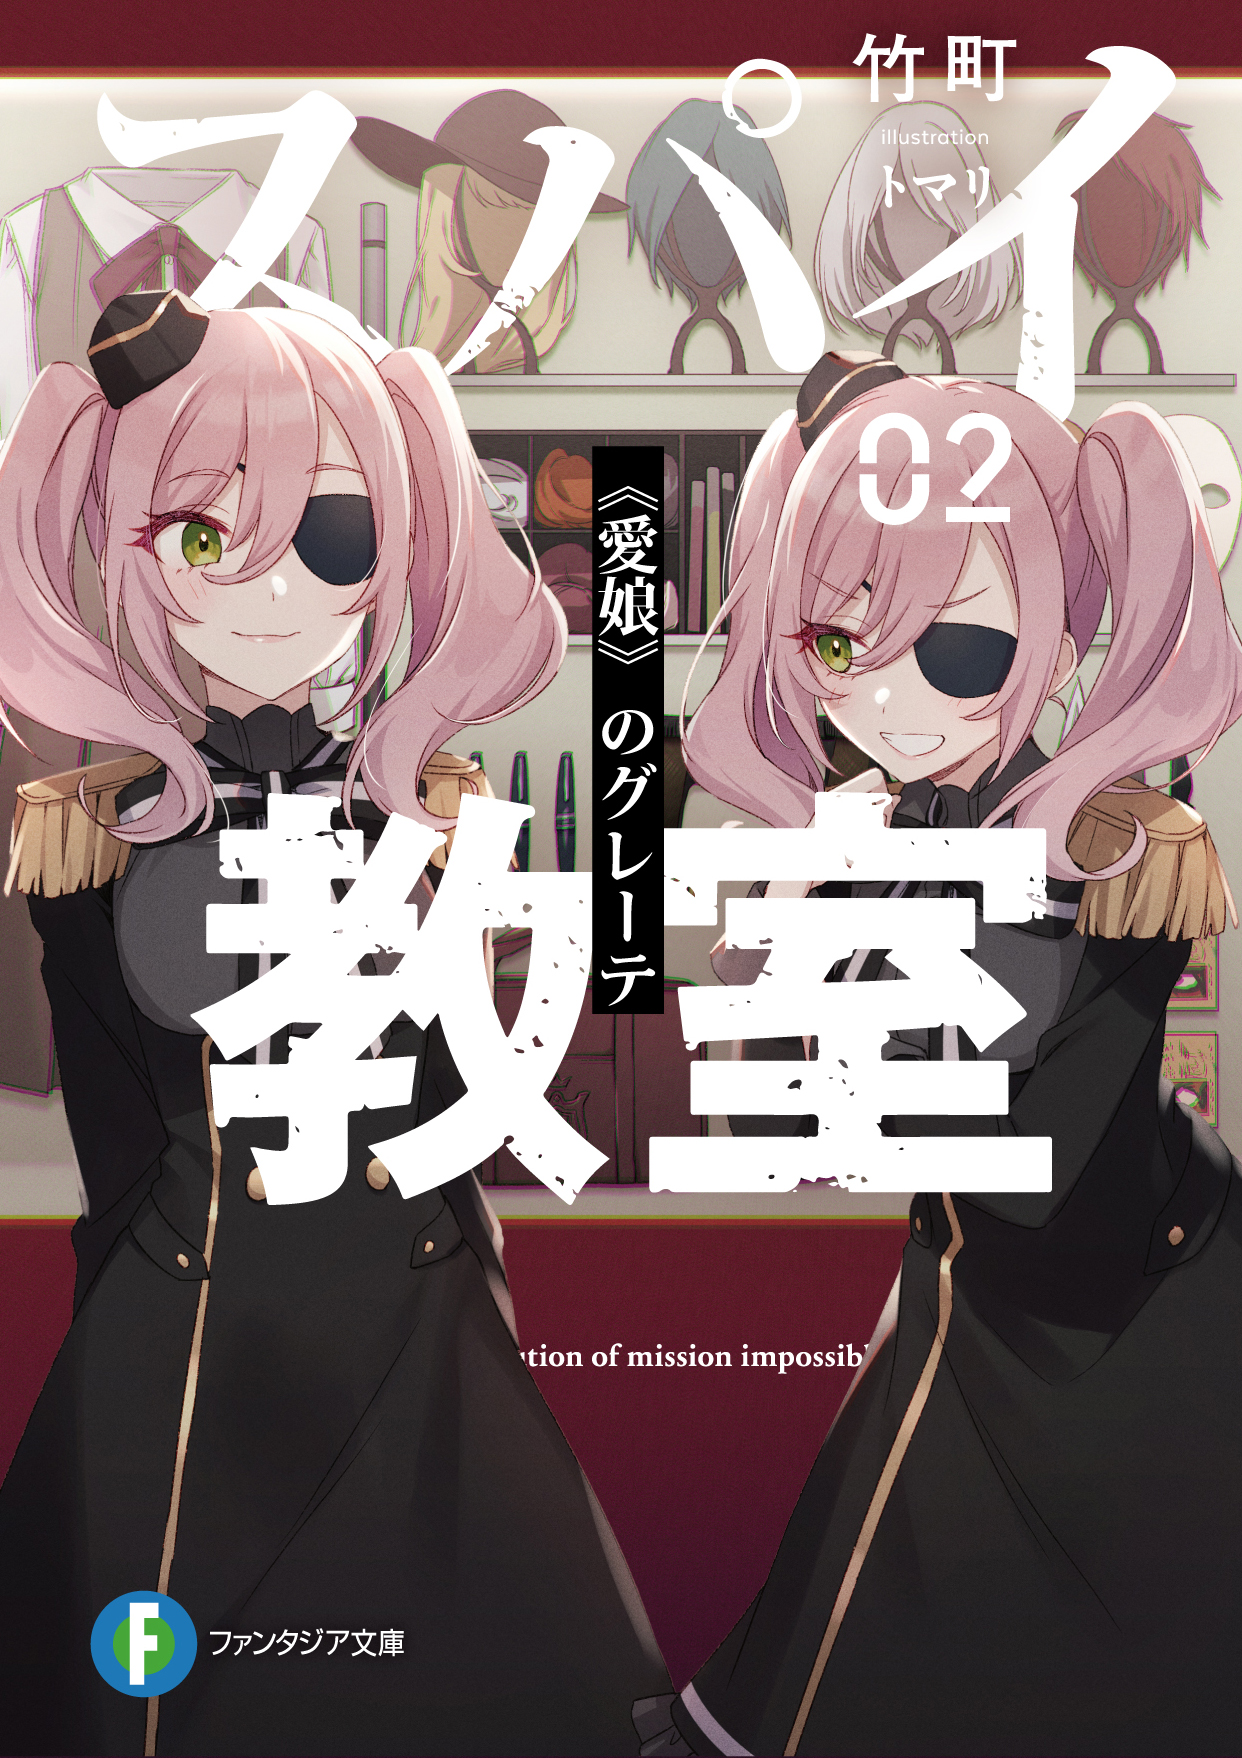 Spy Classroom Manga Volume 2 - Spy Classroom Manga Volume 2